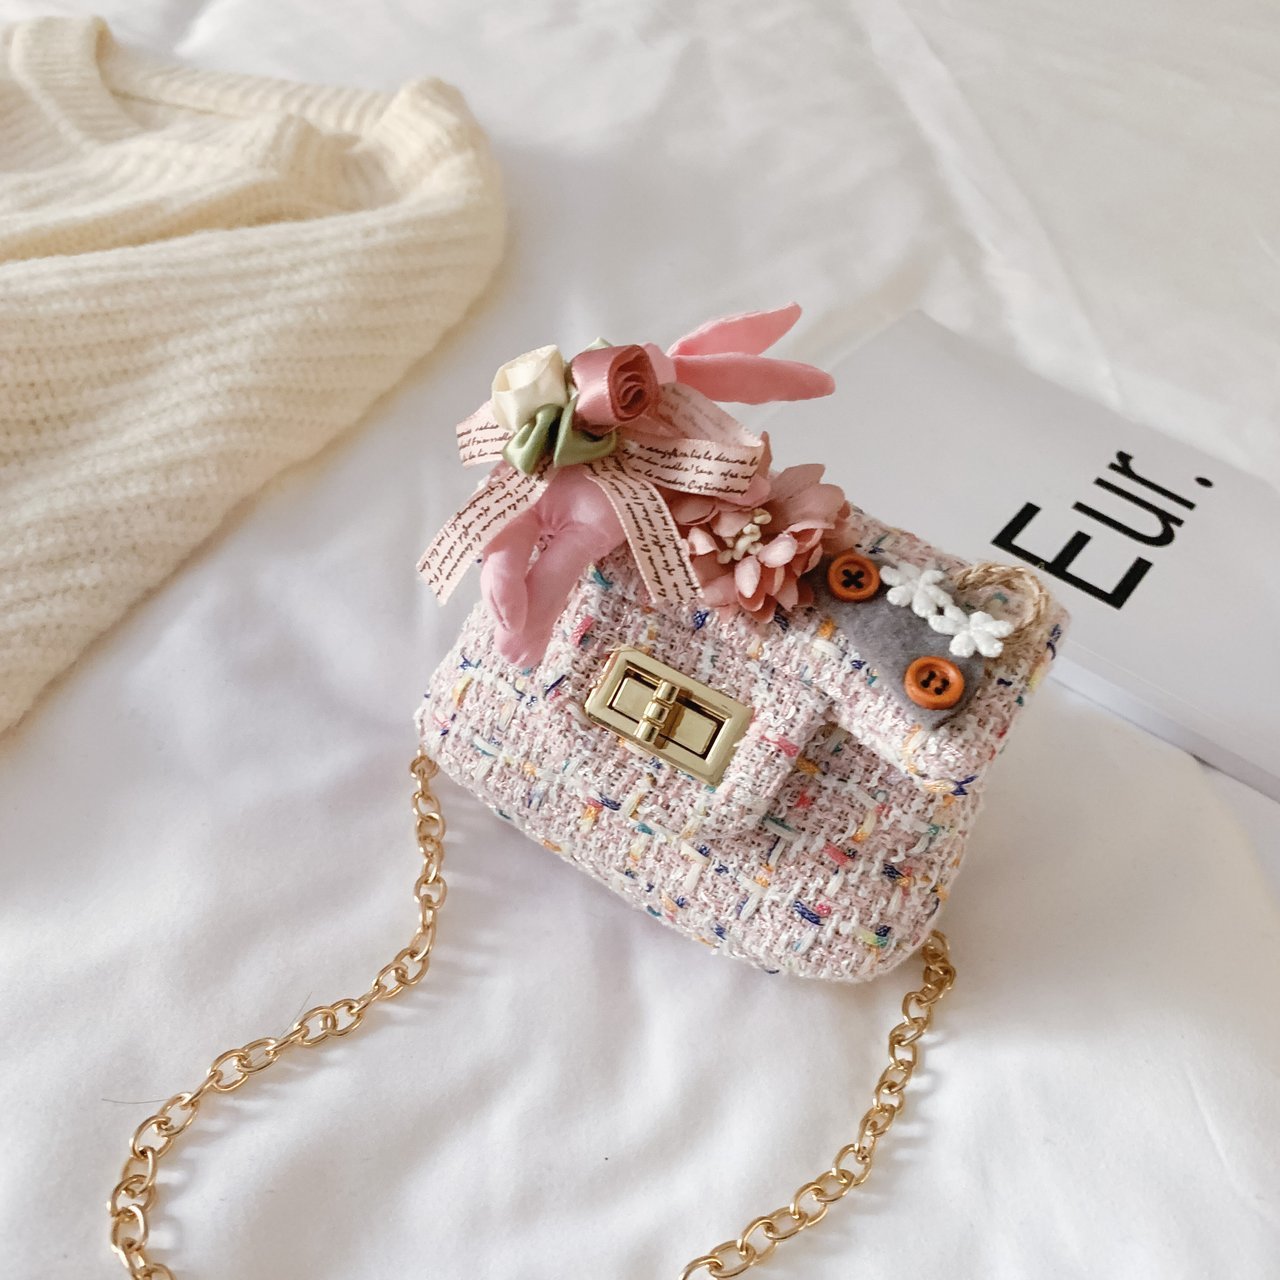 Children's Bag Cute Girls' Cartoon Flower Shoulder Bag Chanel Style Messenger Bag Baby Coin Purse Candy Bag